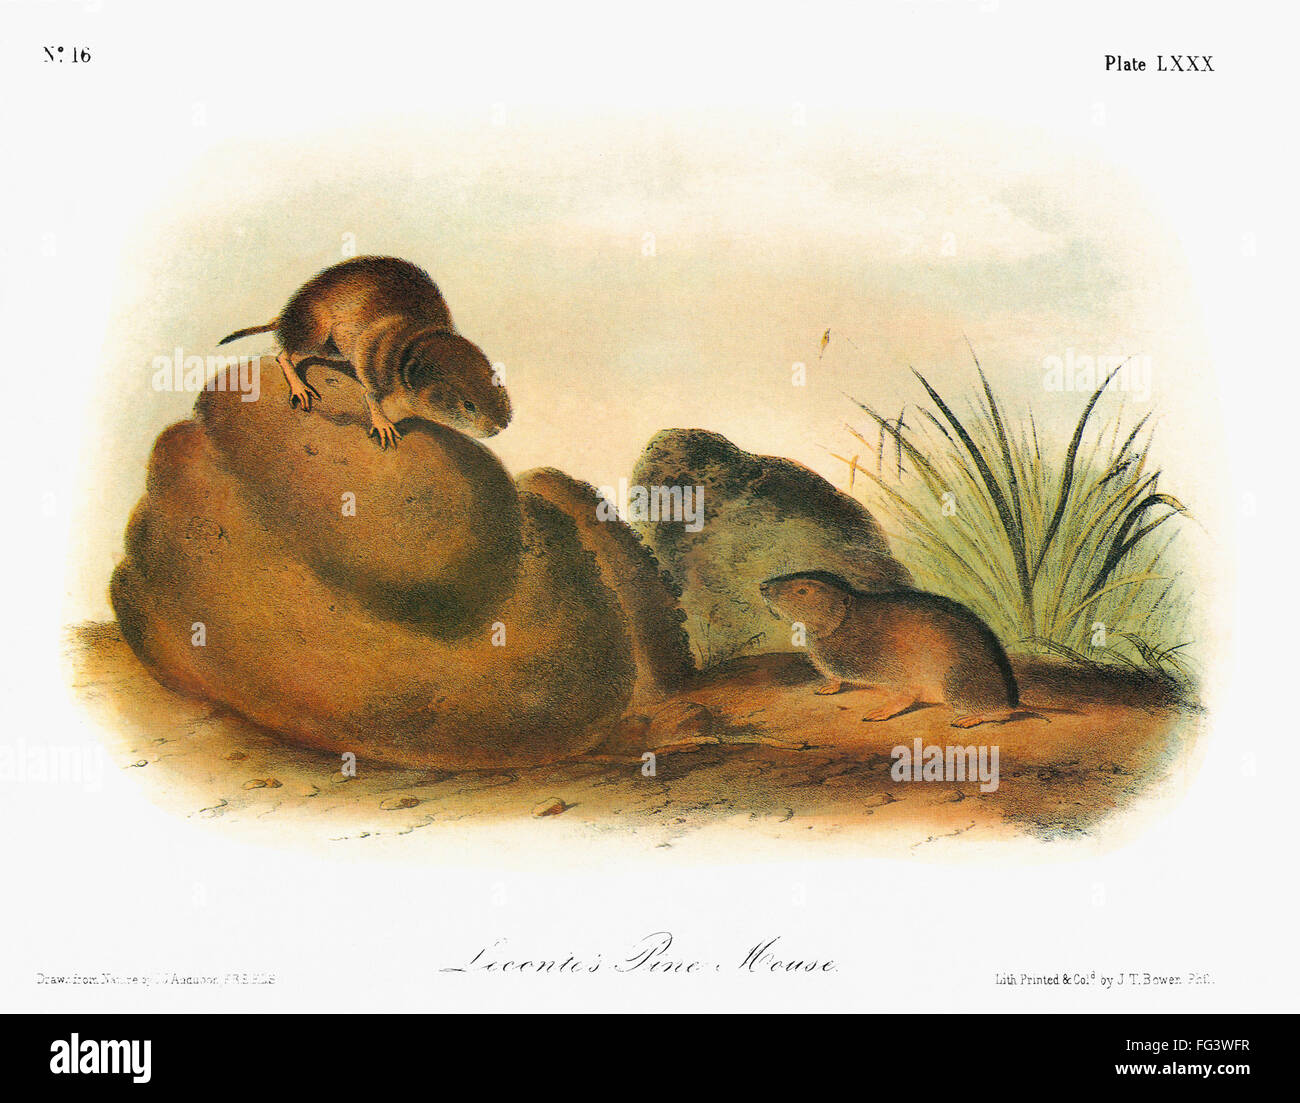 AUDUBON: VOLE. /nWoodland vole, or Leconte's pine mouse (Microtus pinetorum). Lithograph, c1851, after a painting by John James Audubon for his 'Viviparous Quadrupeds of North America.' Stock Photo